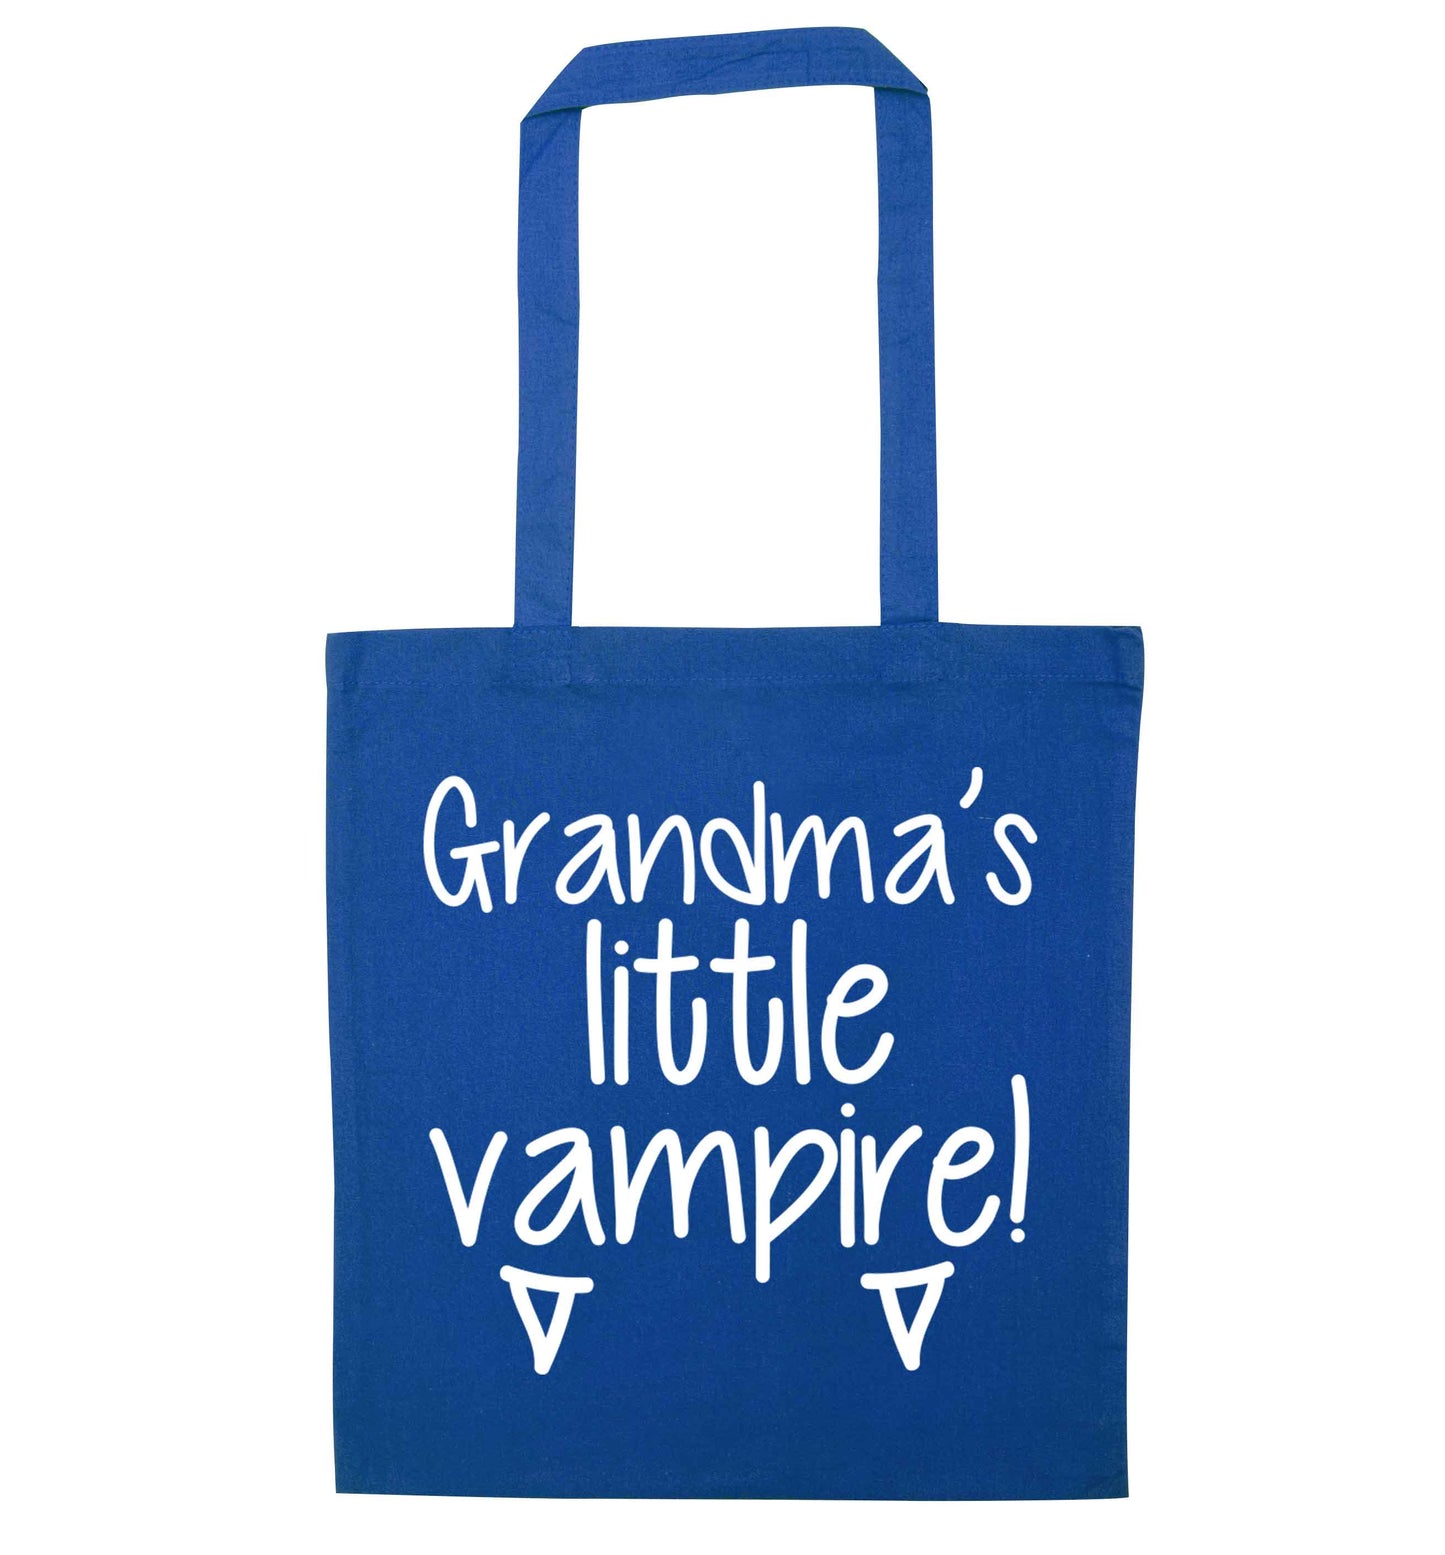 Grandma's little vampire blue tote bag